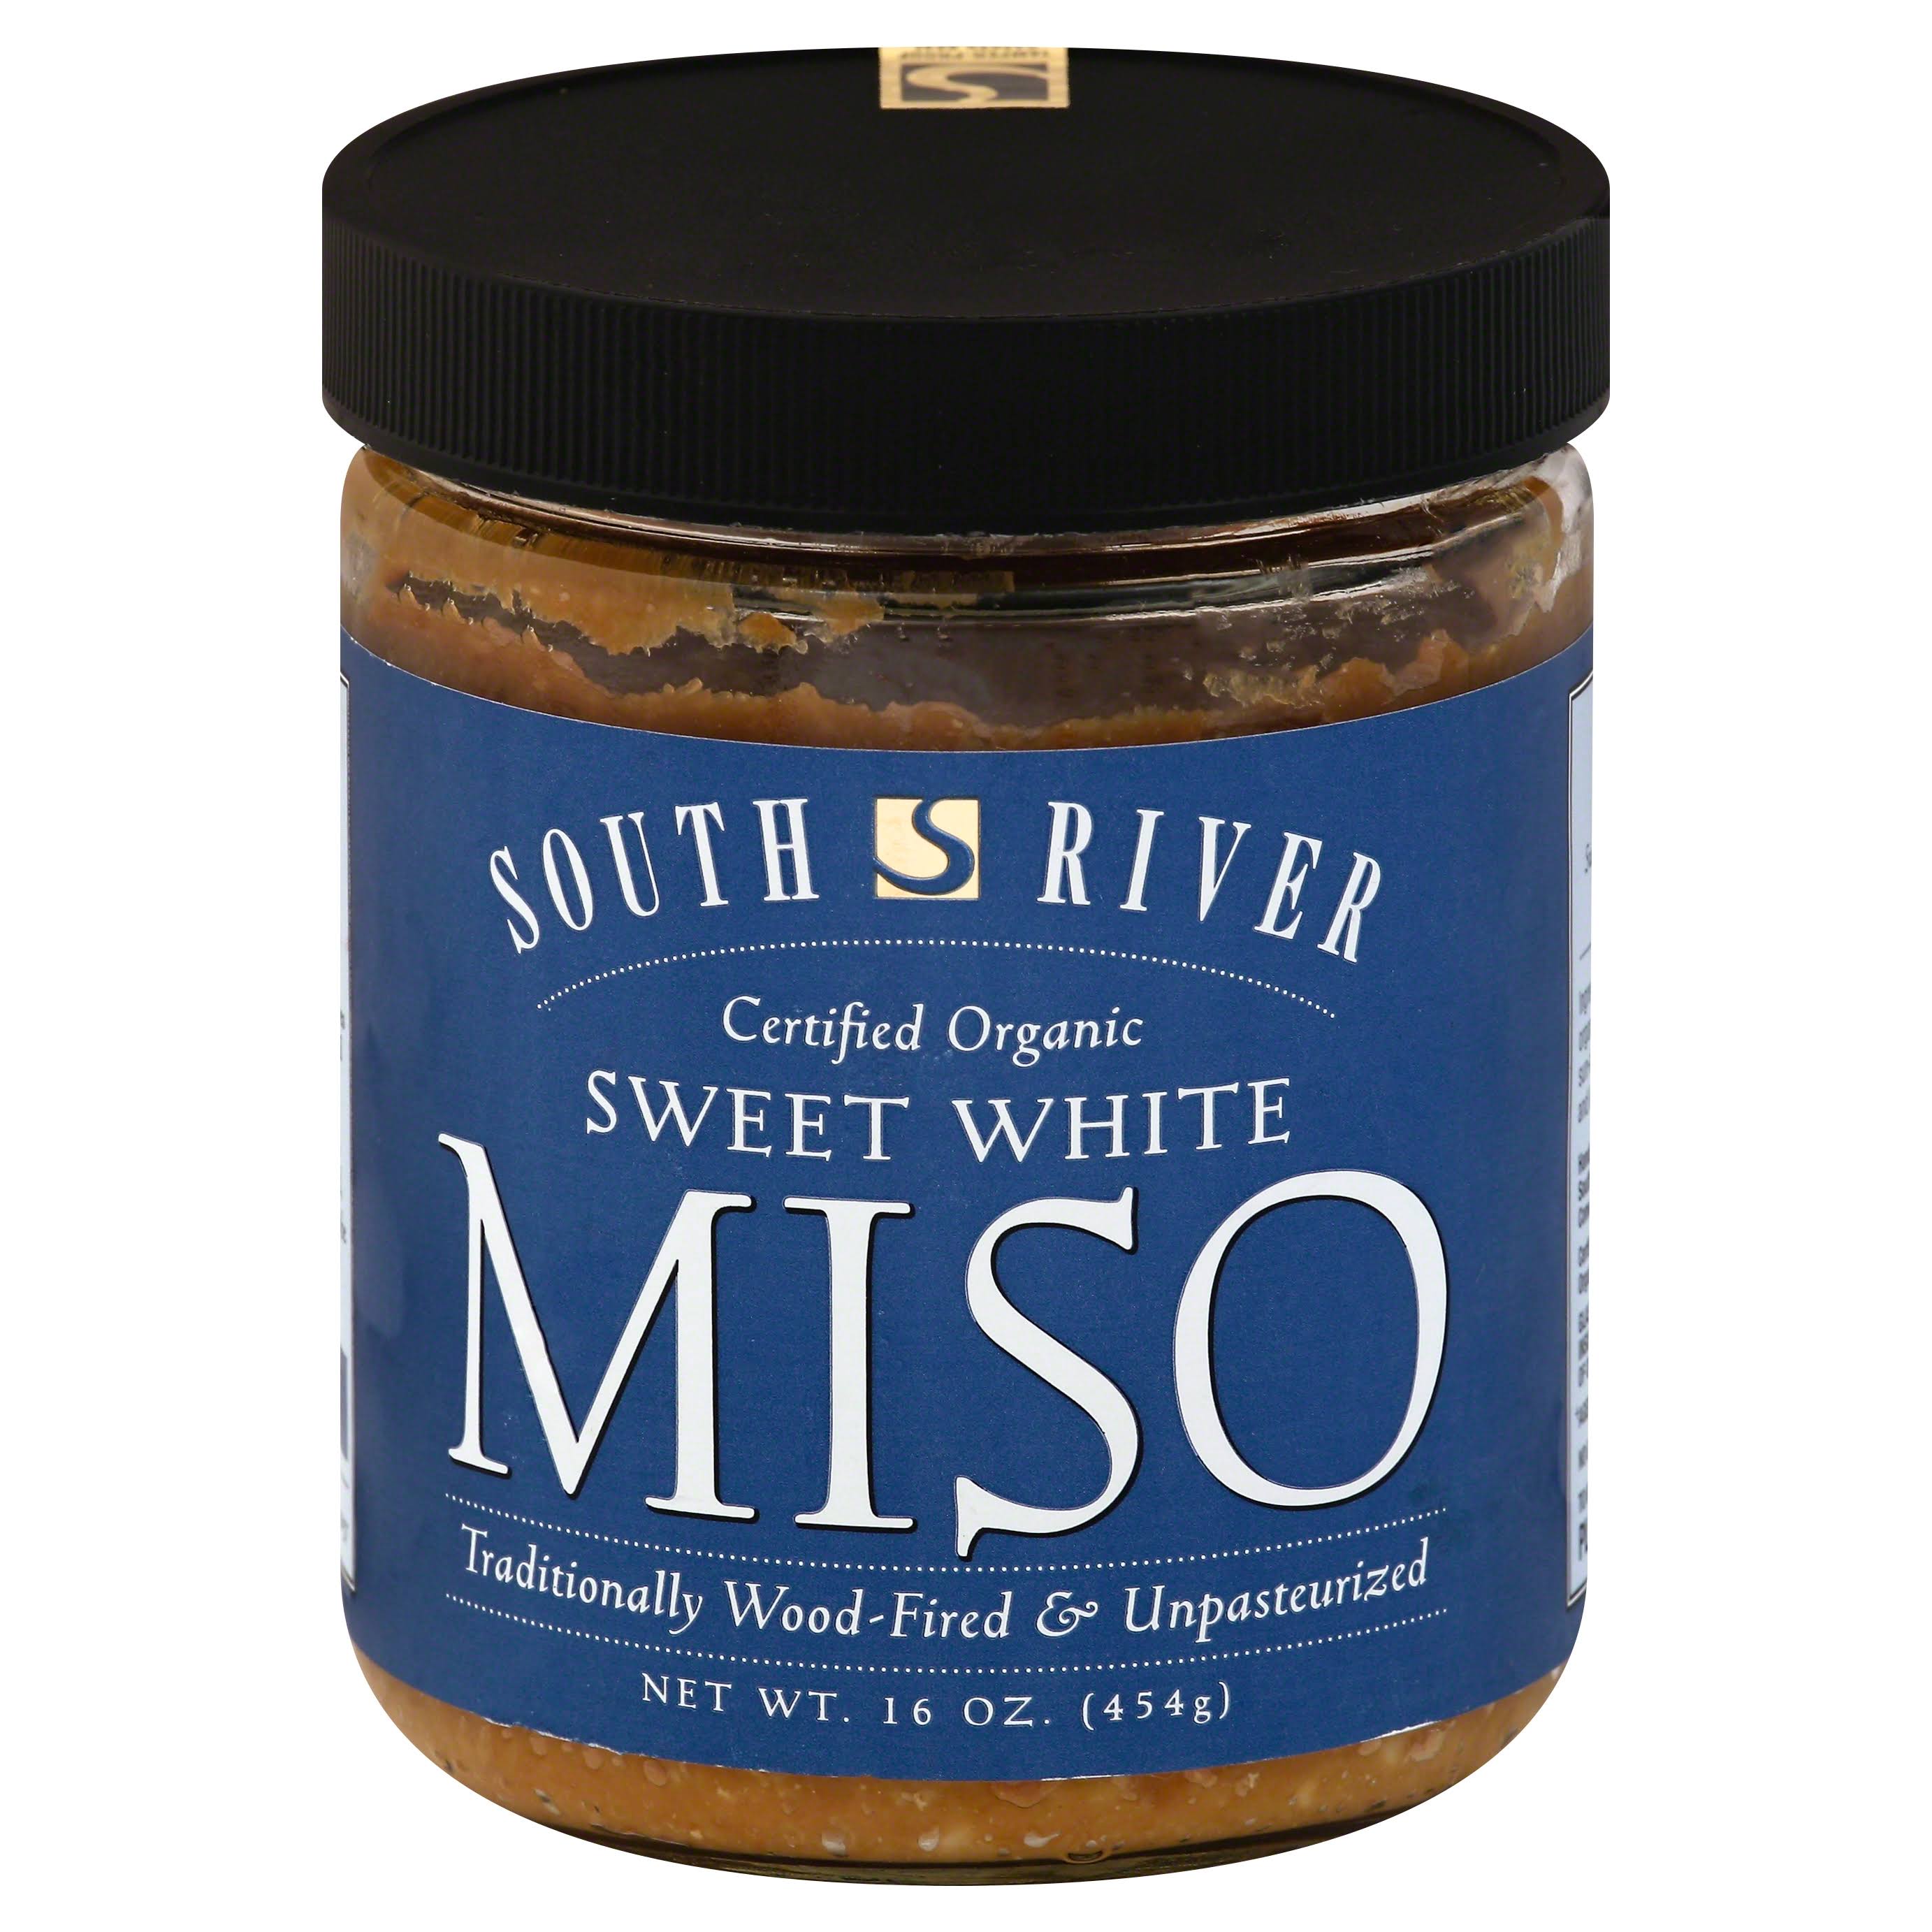 South River Sweet White Miso - 16oz